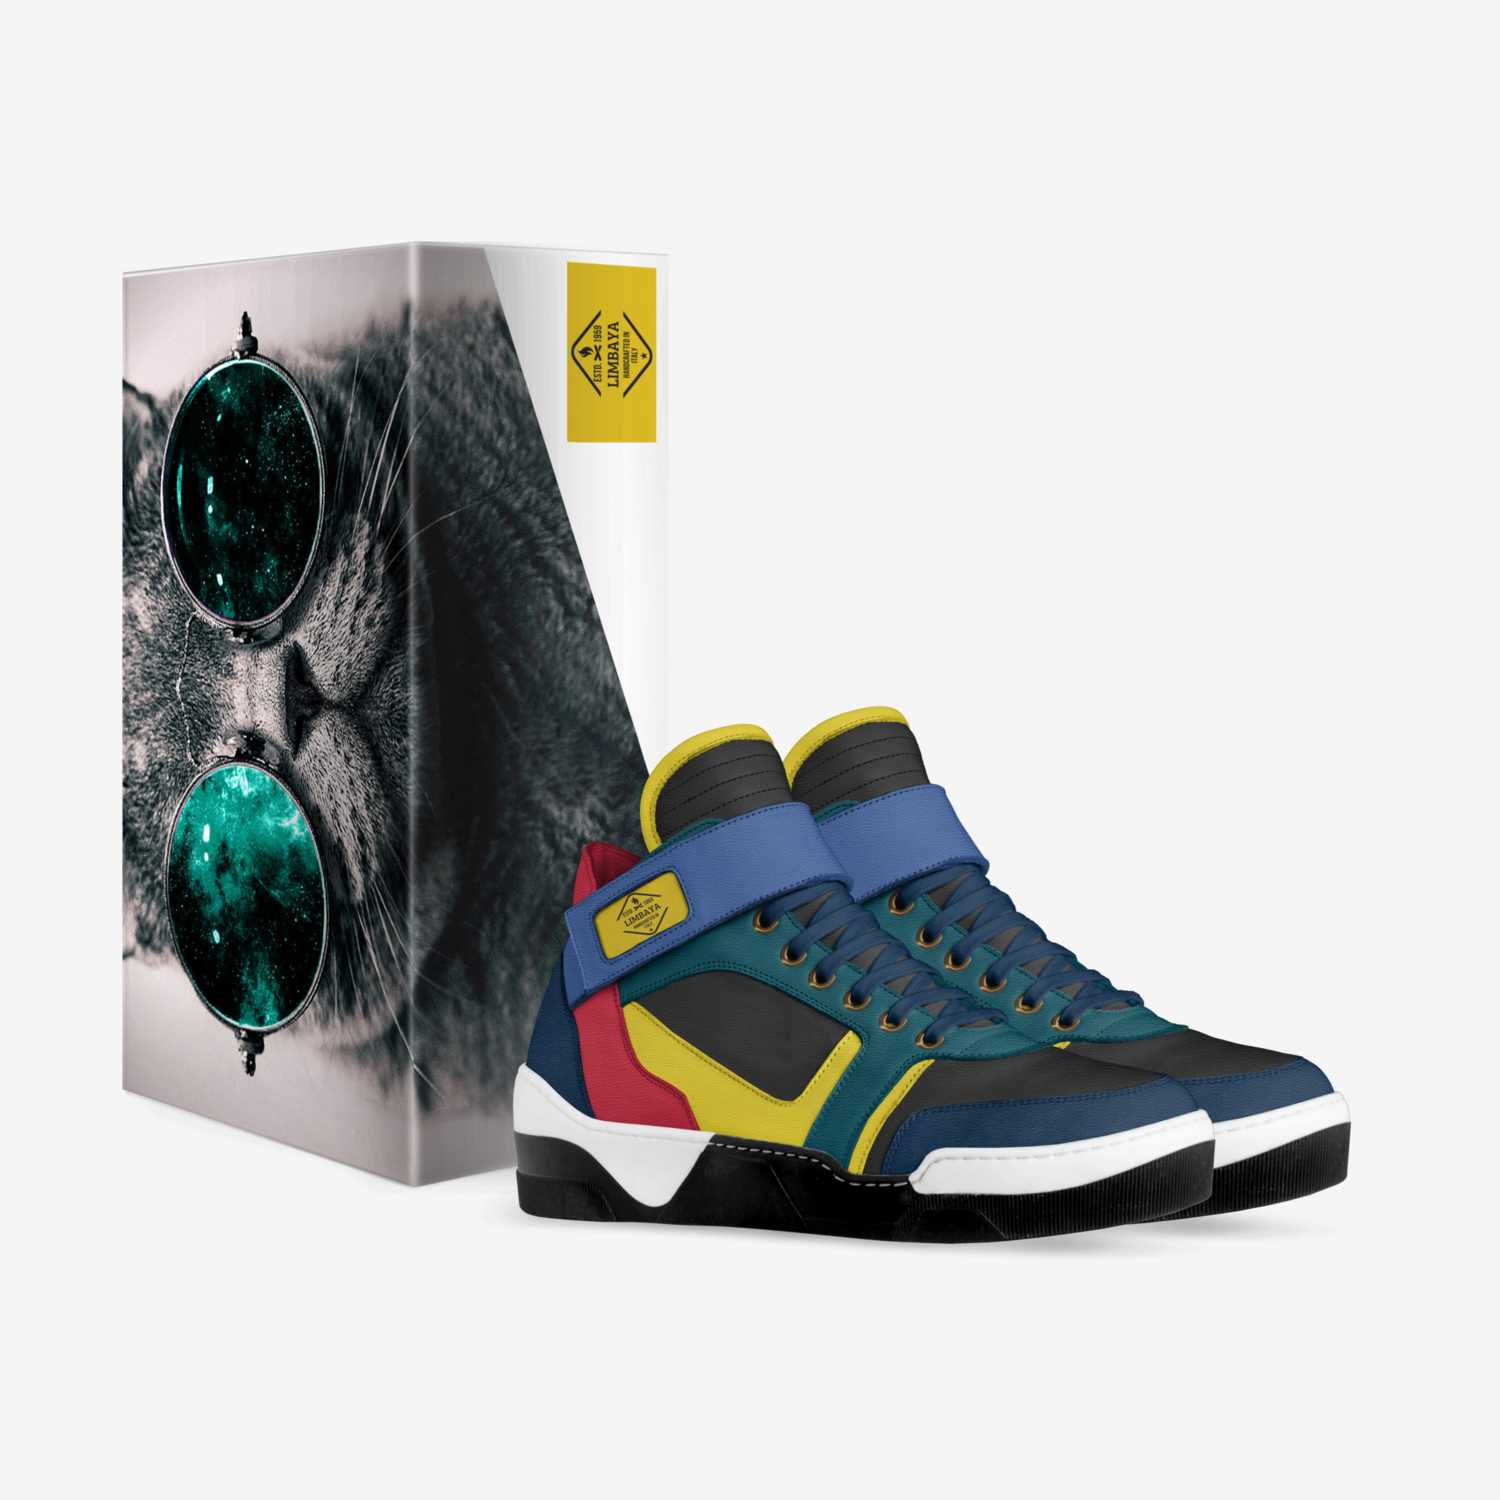 limbaya custom made in Italy shoes by Abdulrahman | Box view